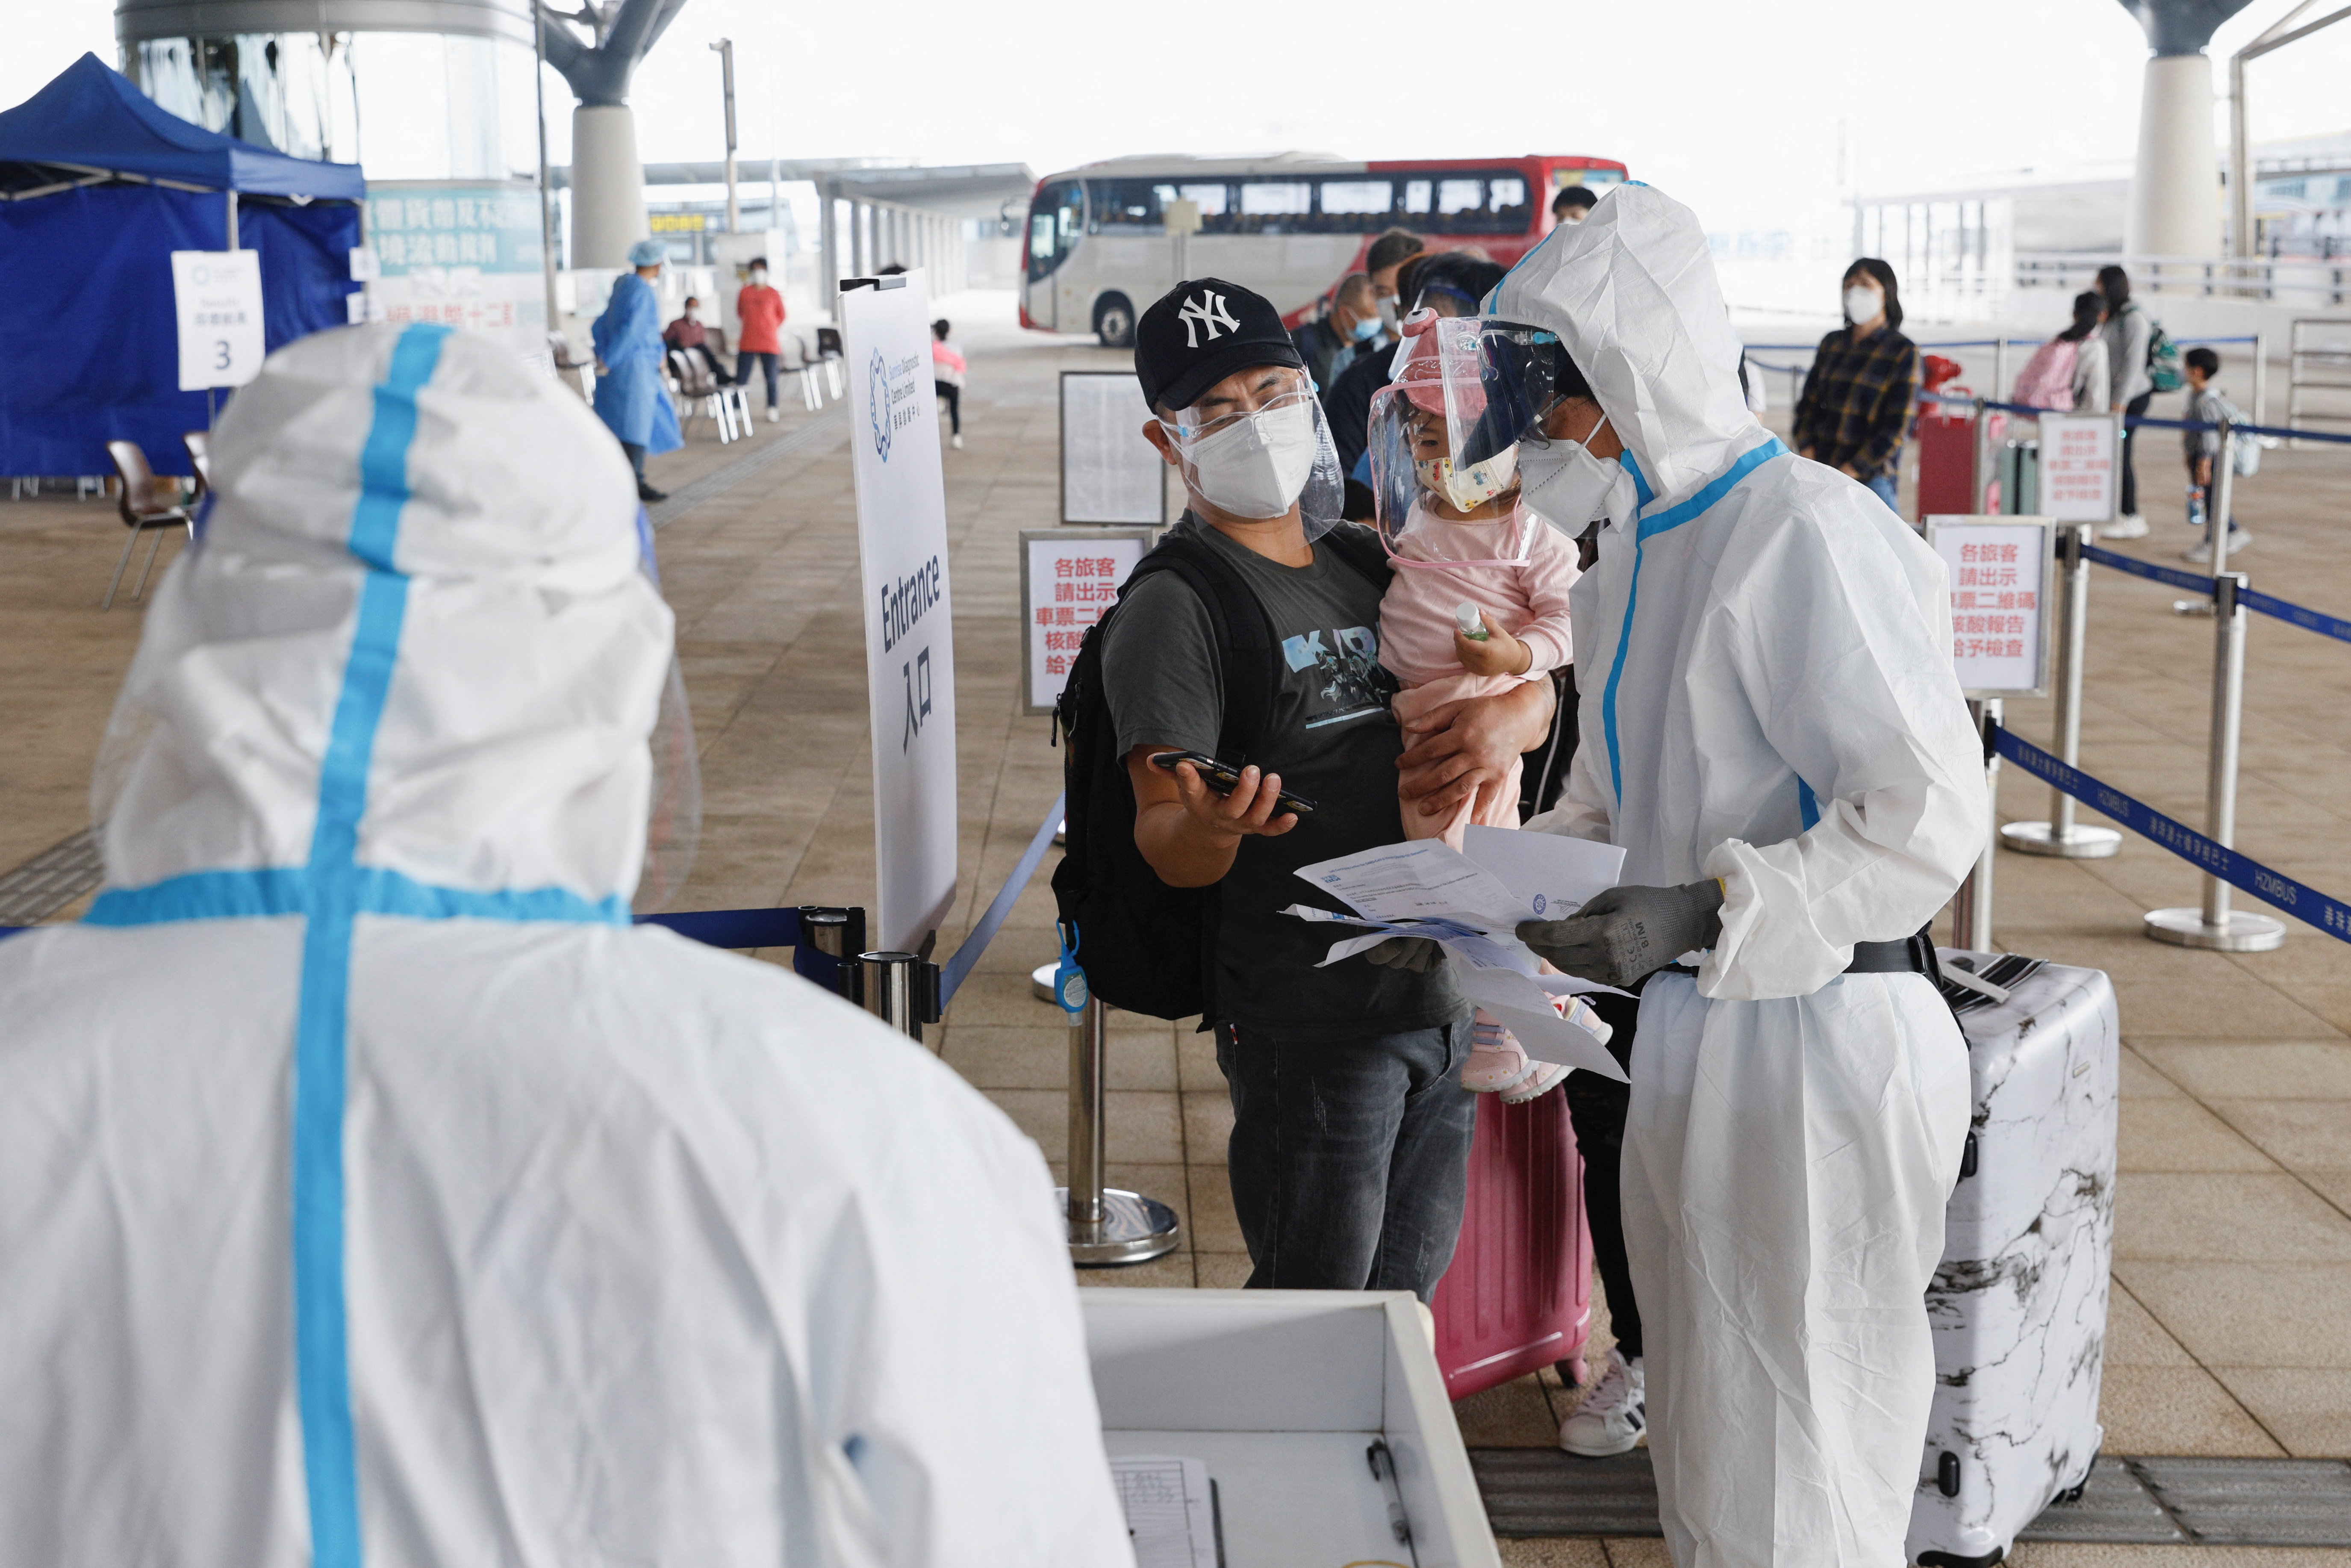 COVID-19 pandemic in Hong Kong